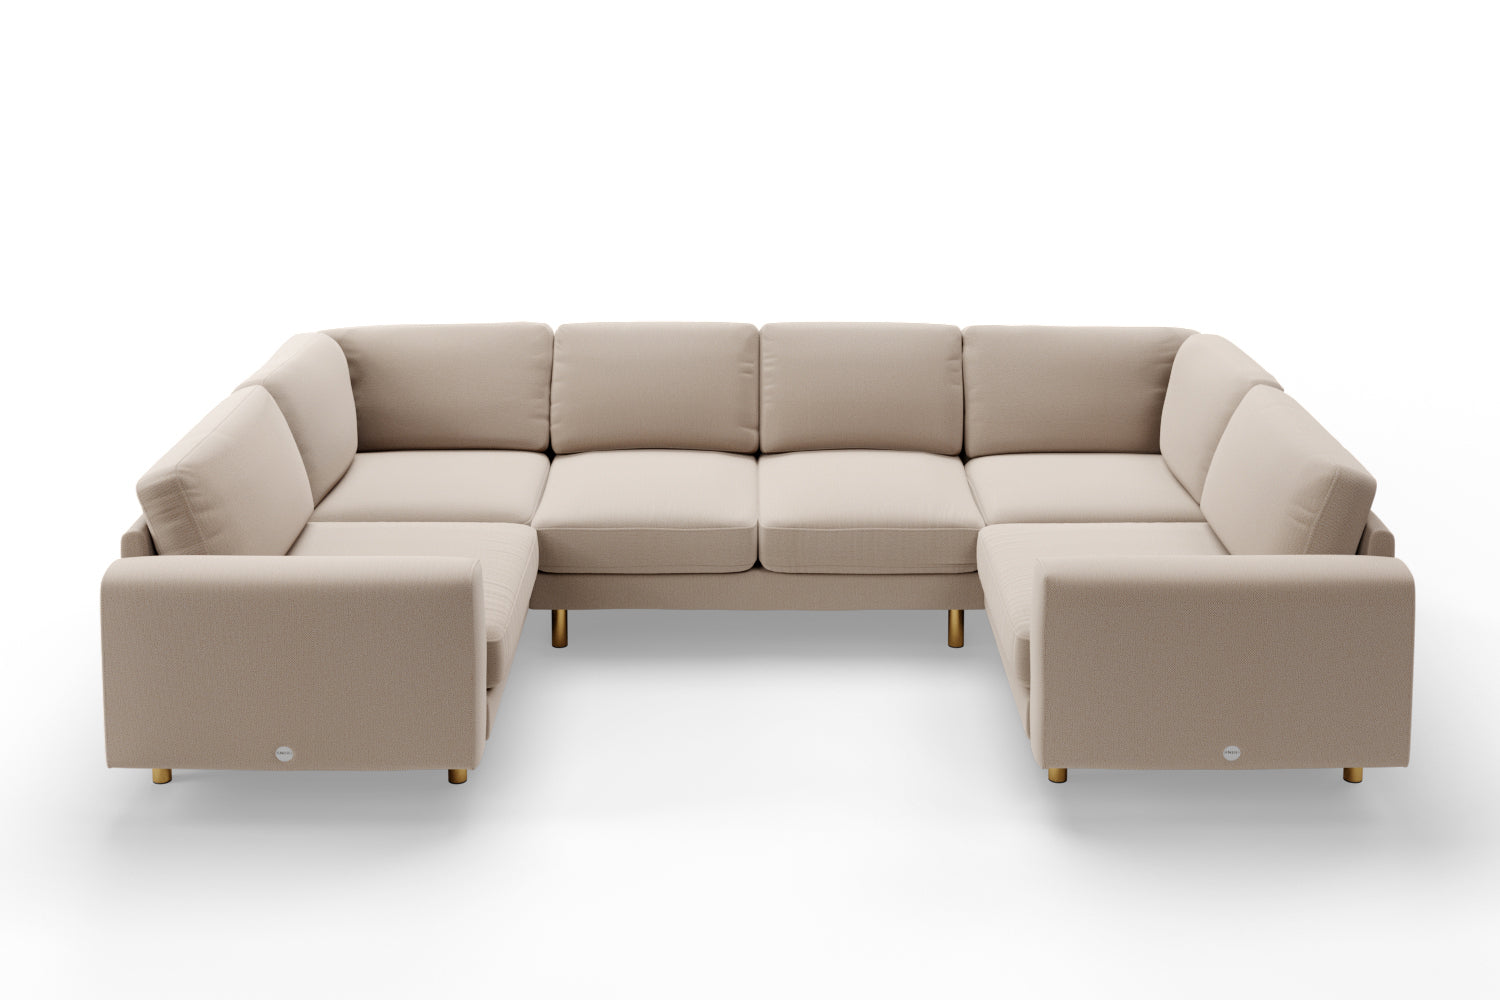 SNUG | The Big Chill Corner Sofa Medium in Oatmeal